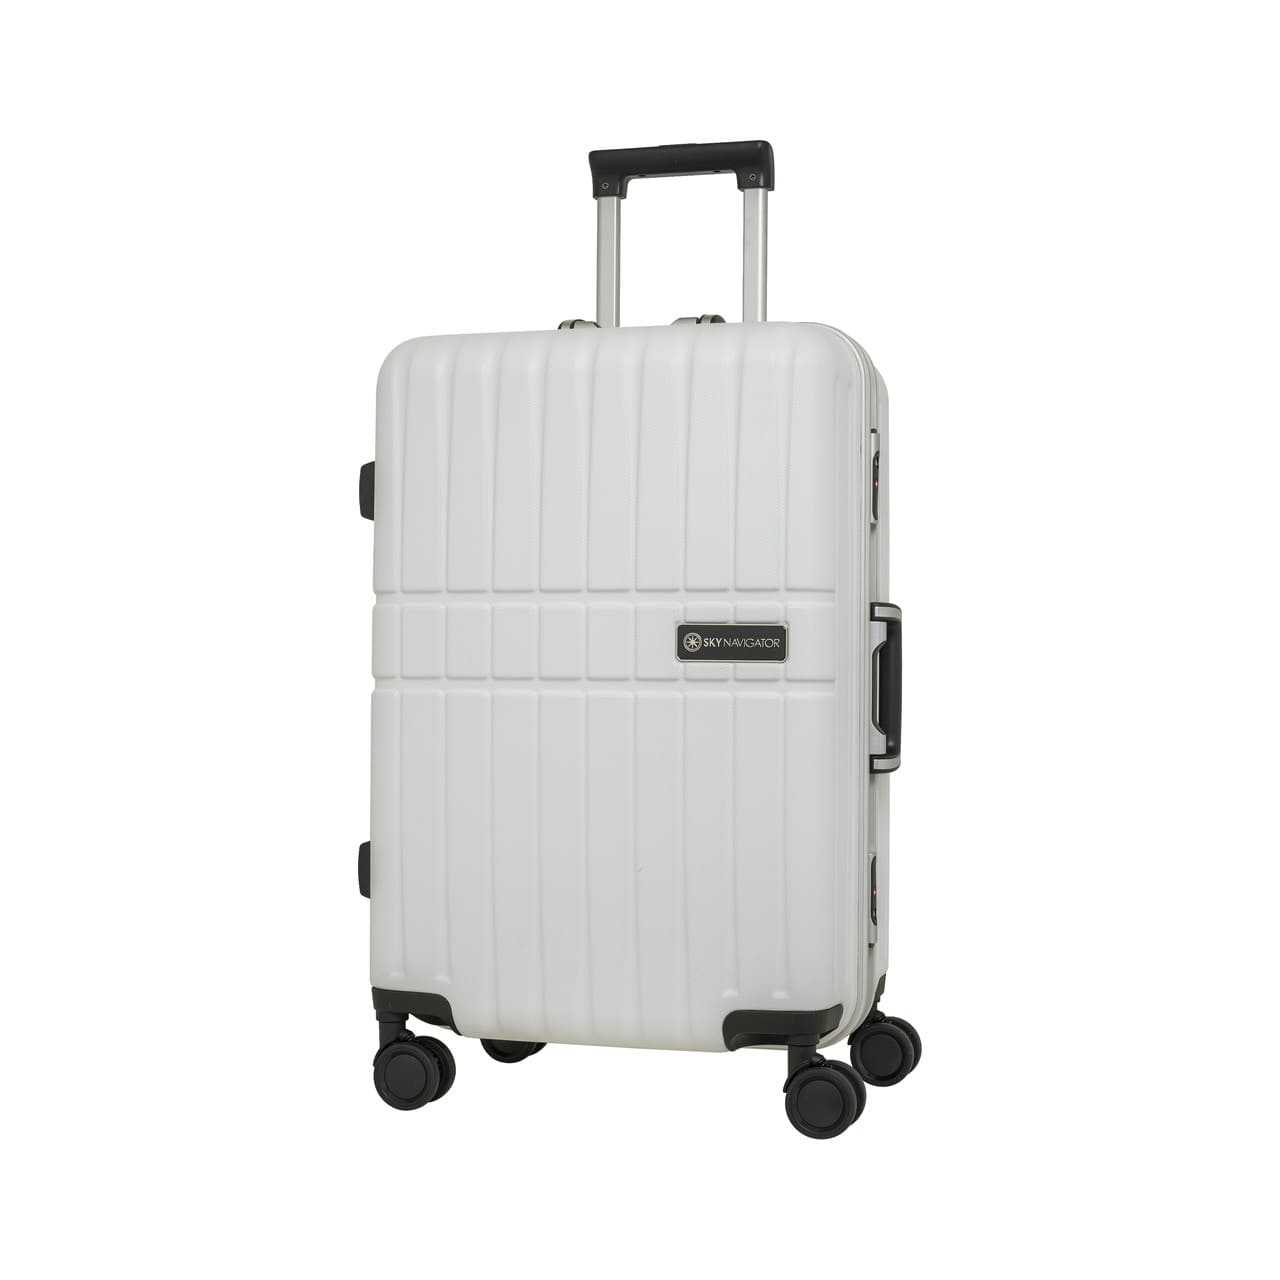 SKYNAVIGATORのスーツケースSK-0850-59のホワイトの正面振り画像